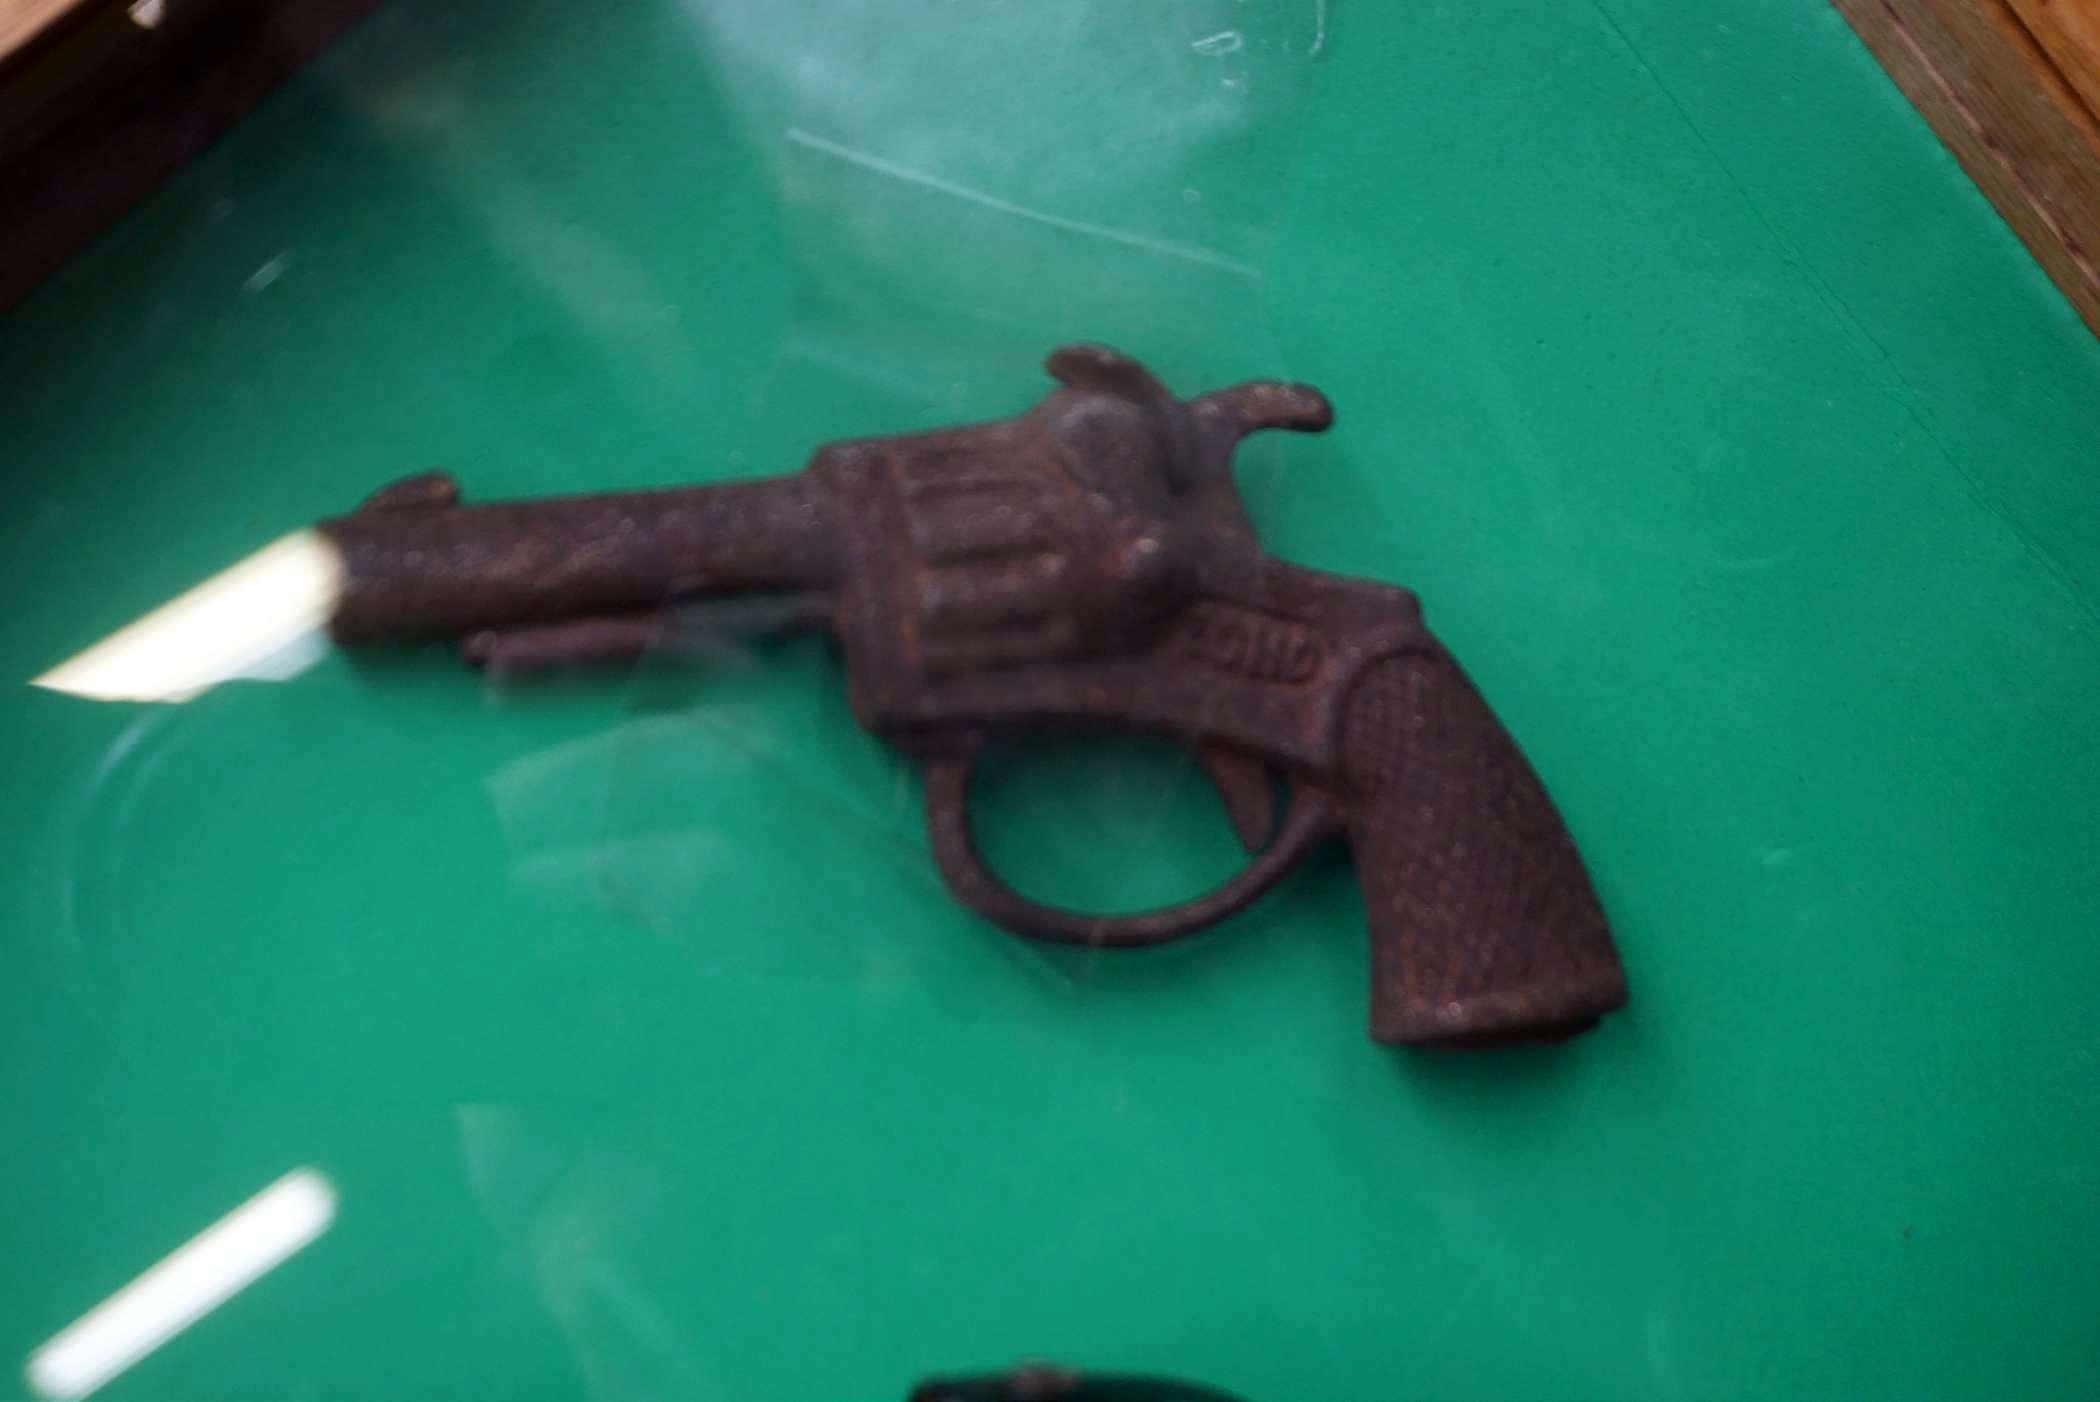 Display Case W/ 3 Toy Guns - Bang-O, Davy Crockett & Other